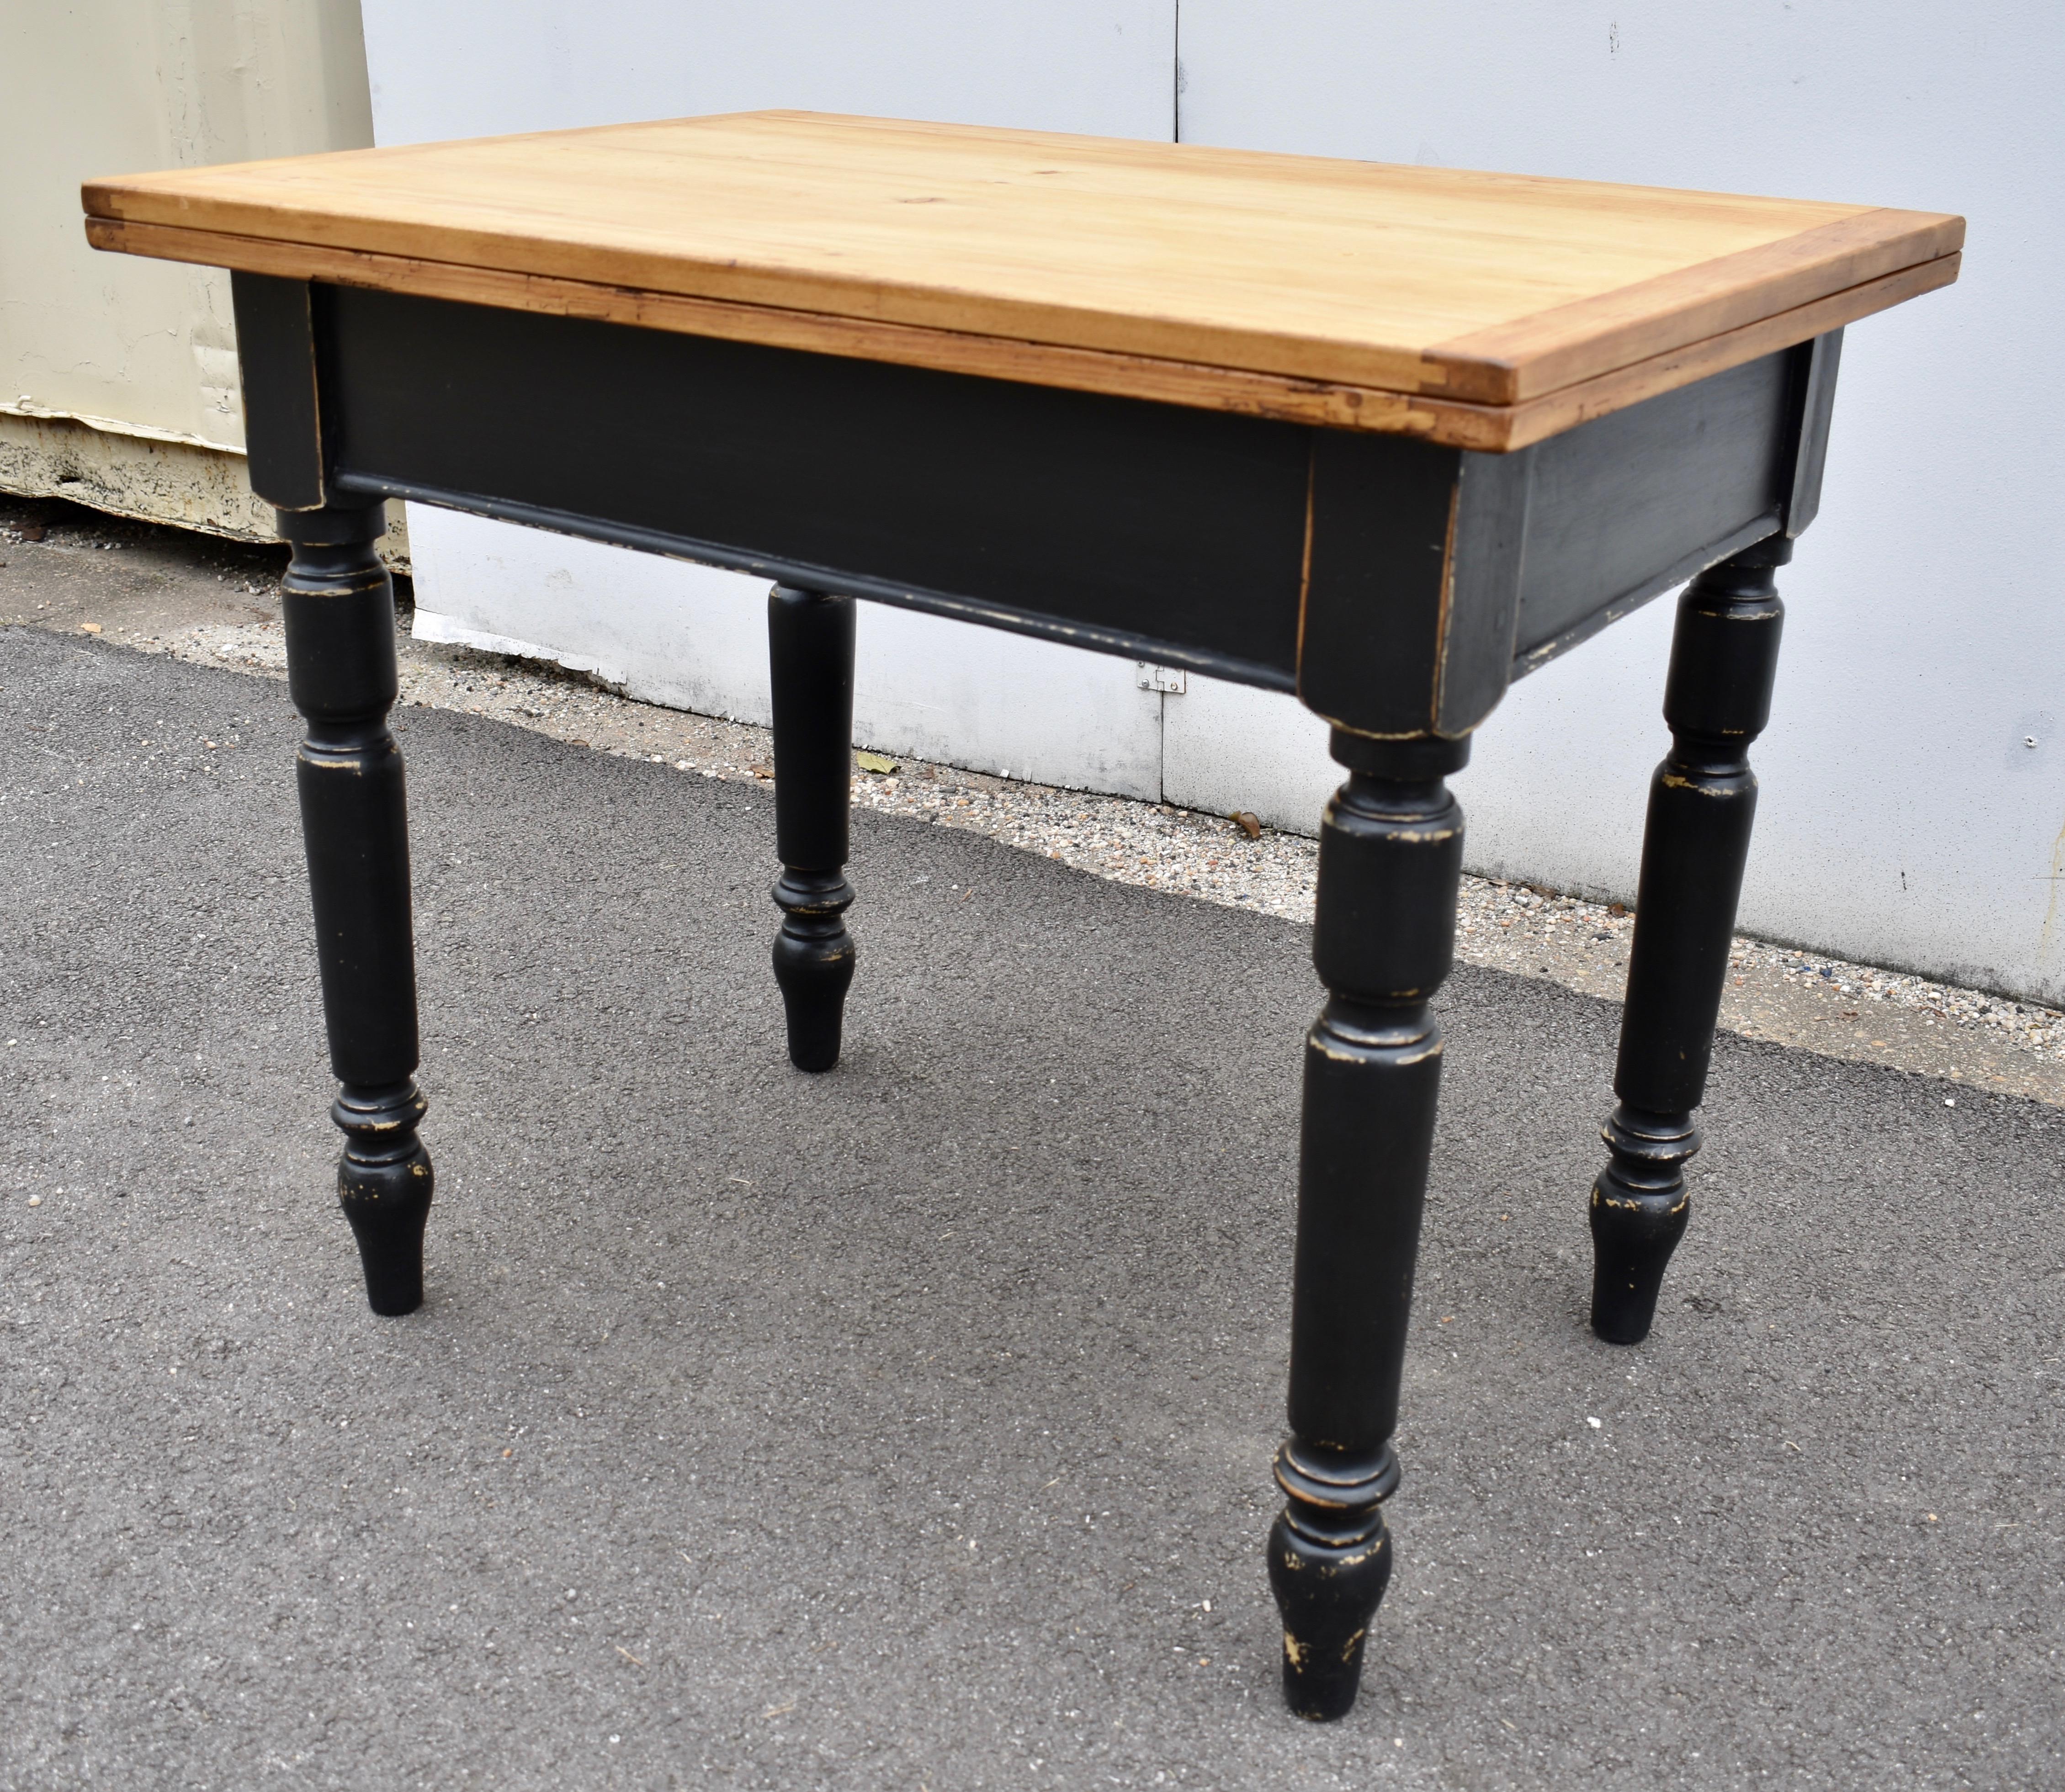 Painted Pine Turned Leg Swivel-Top Table